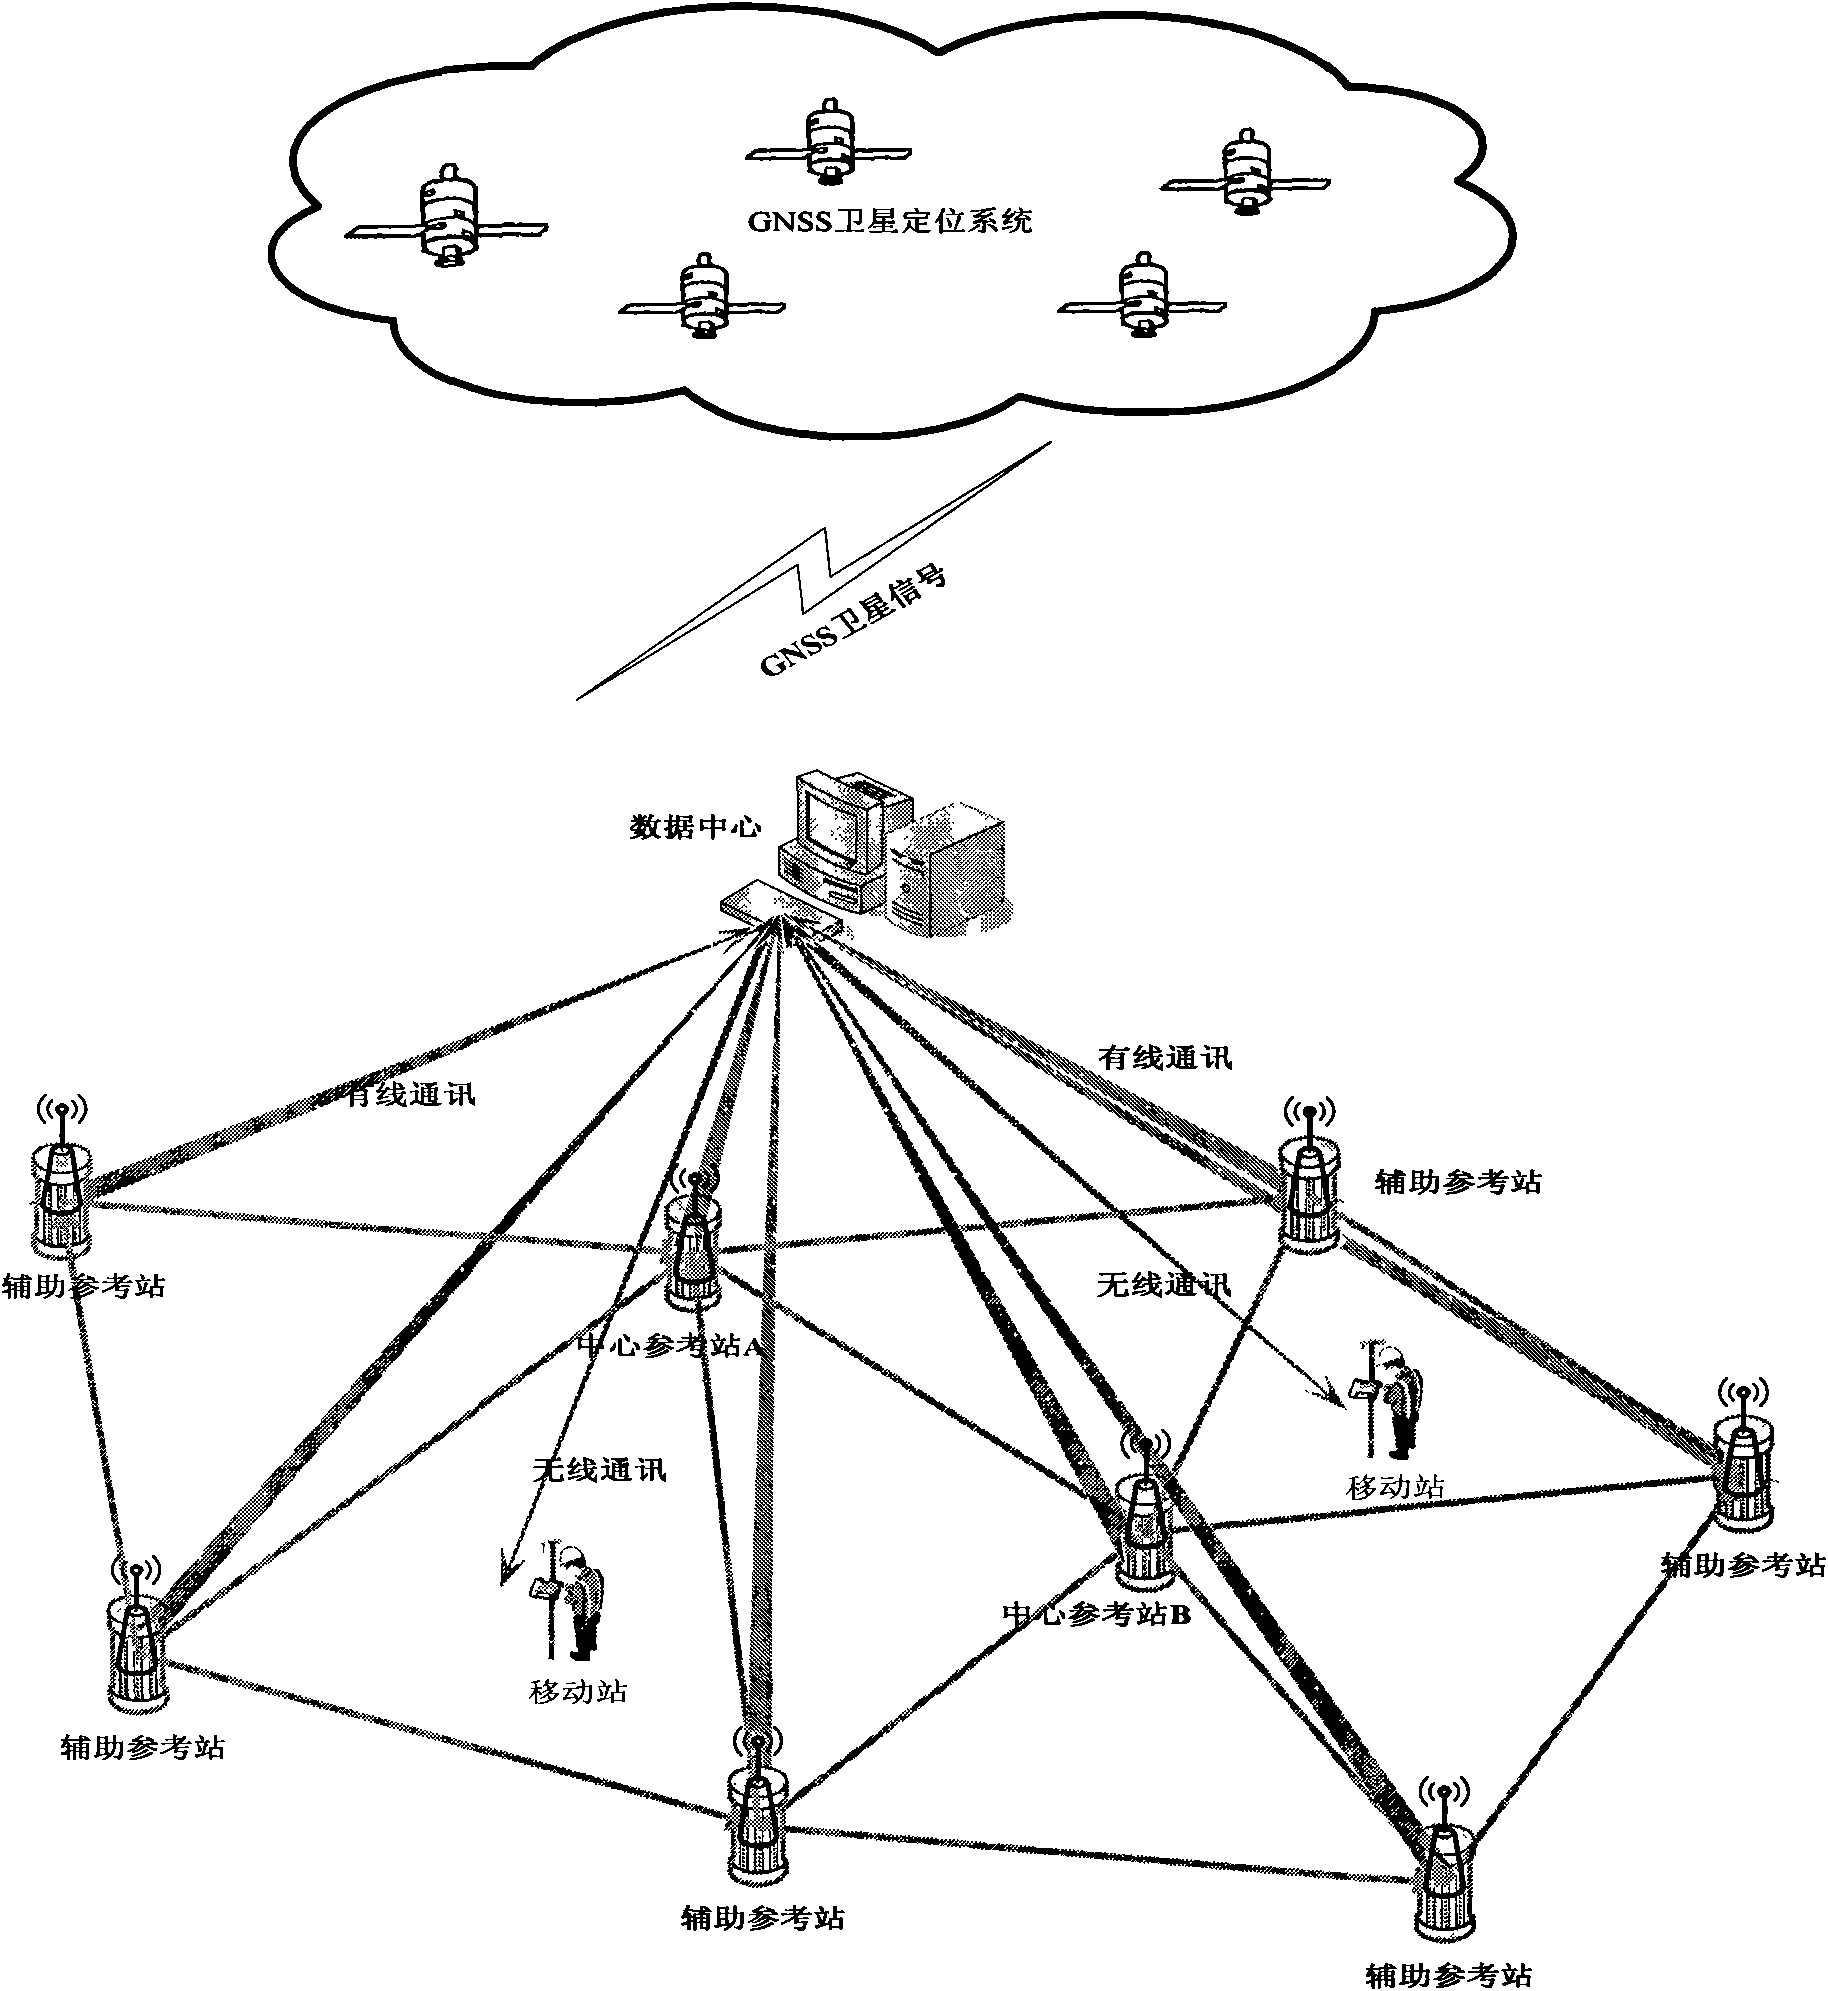 Method for positioning network RTK based on star-shaped virtual reference station